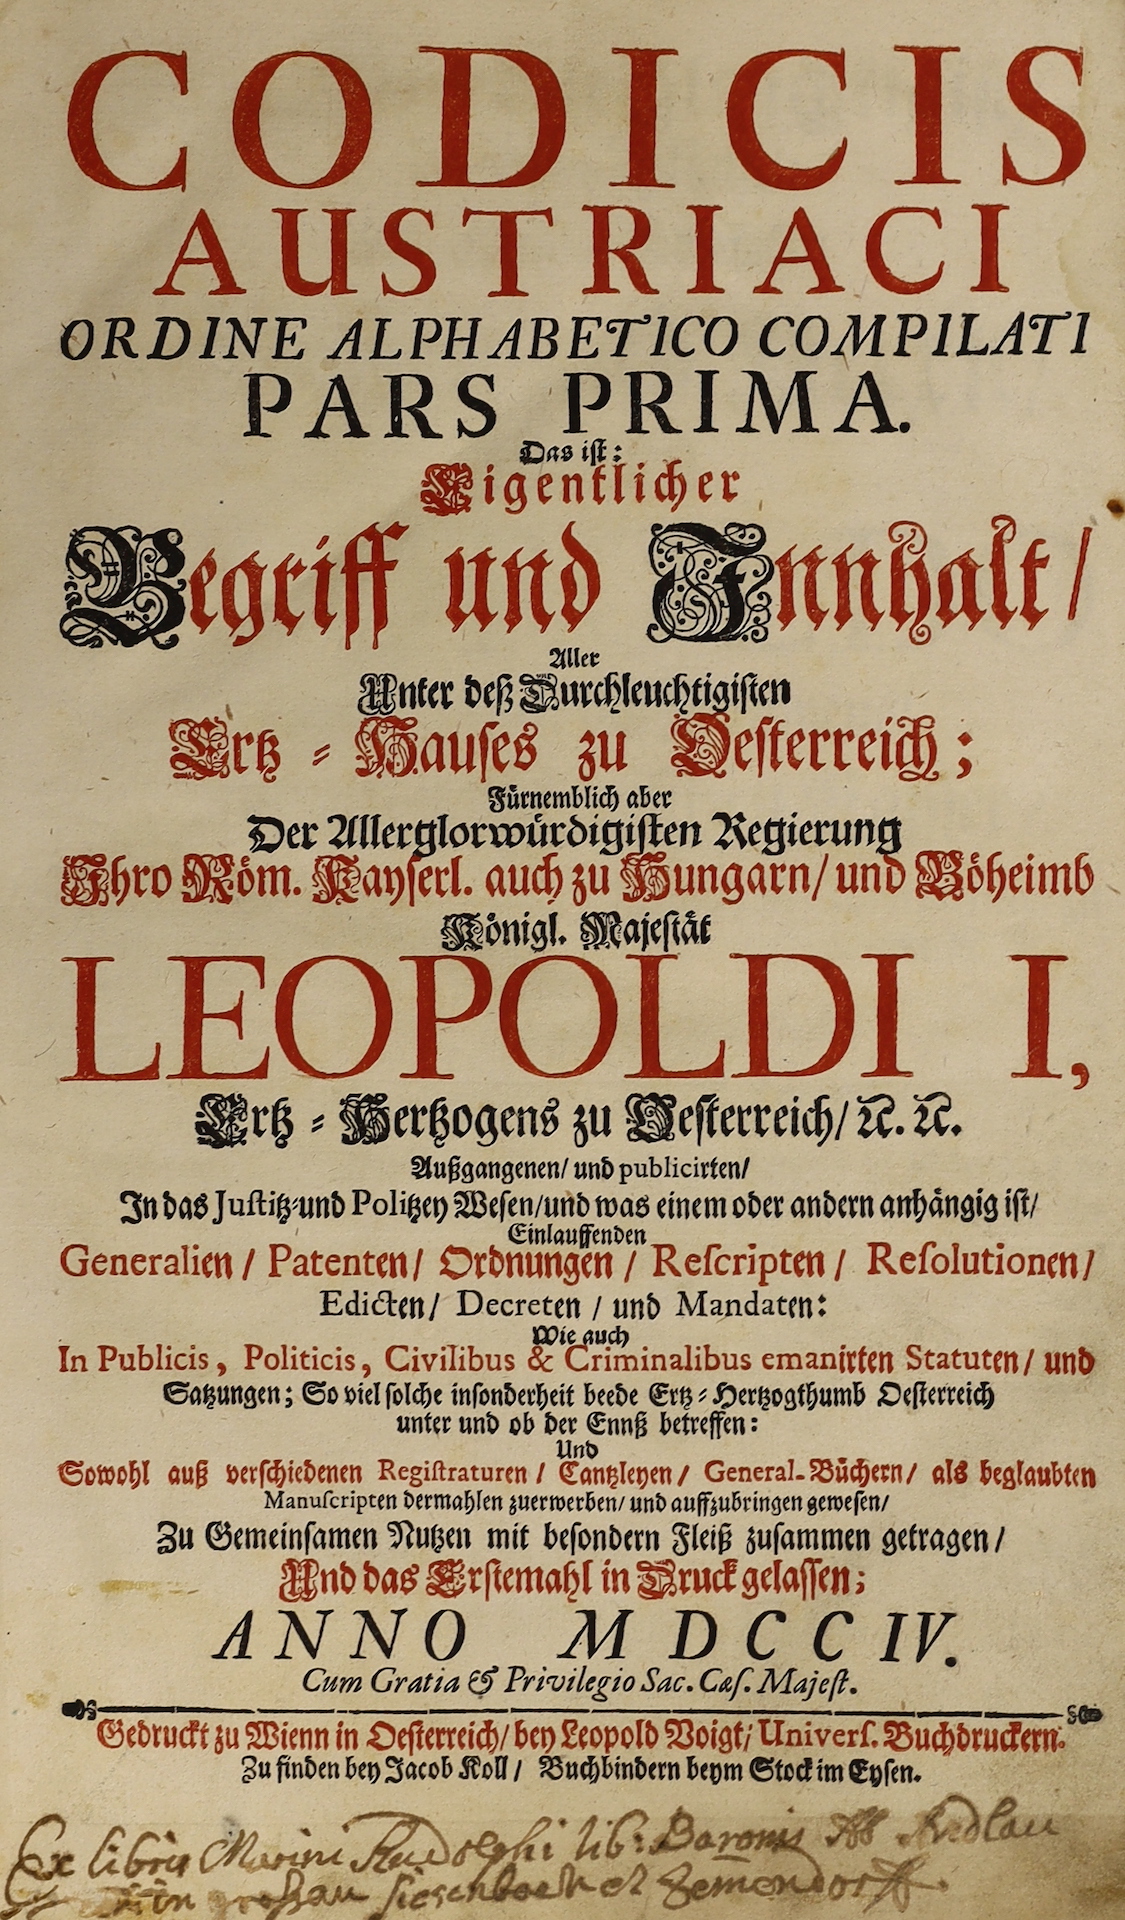 Codicis Austriaci, published 1704, one volume